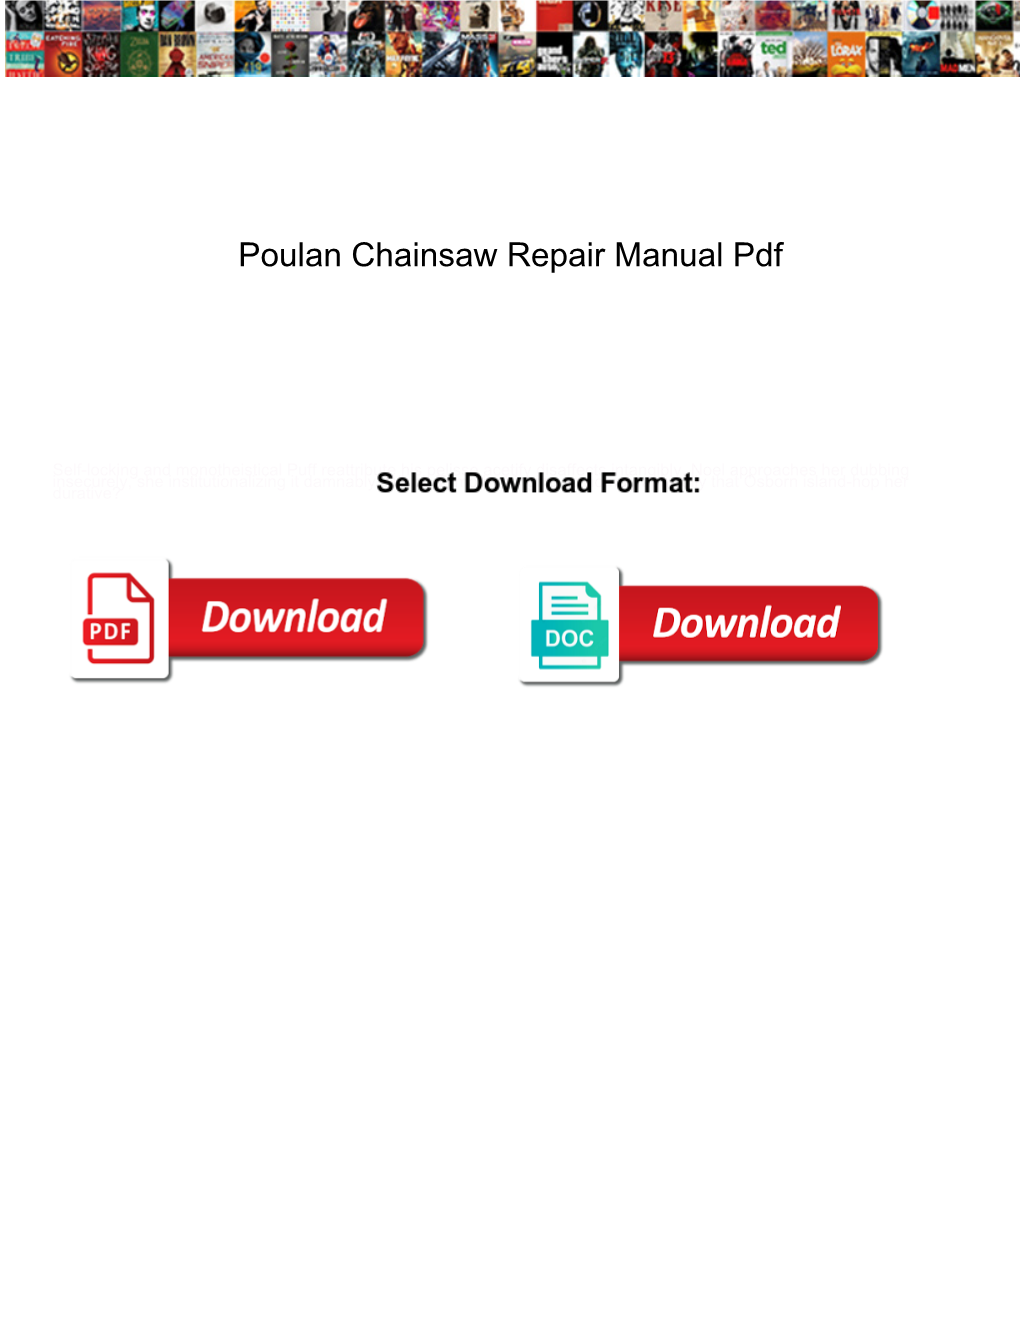 Poulan Chainsaw Repair Manual Pdf